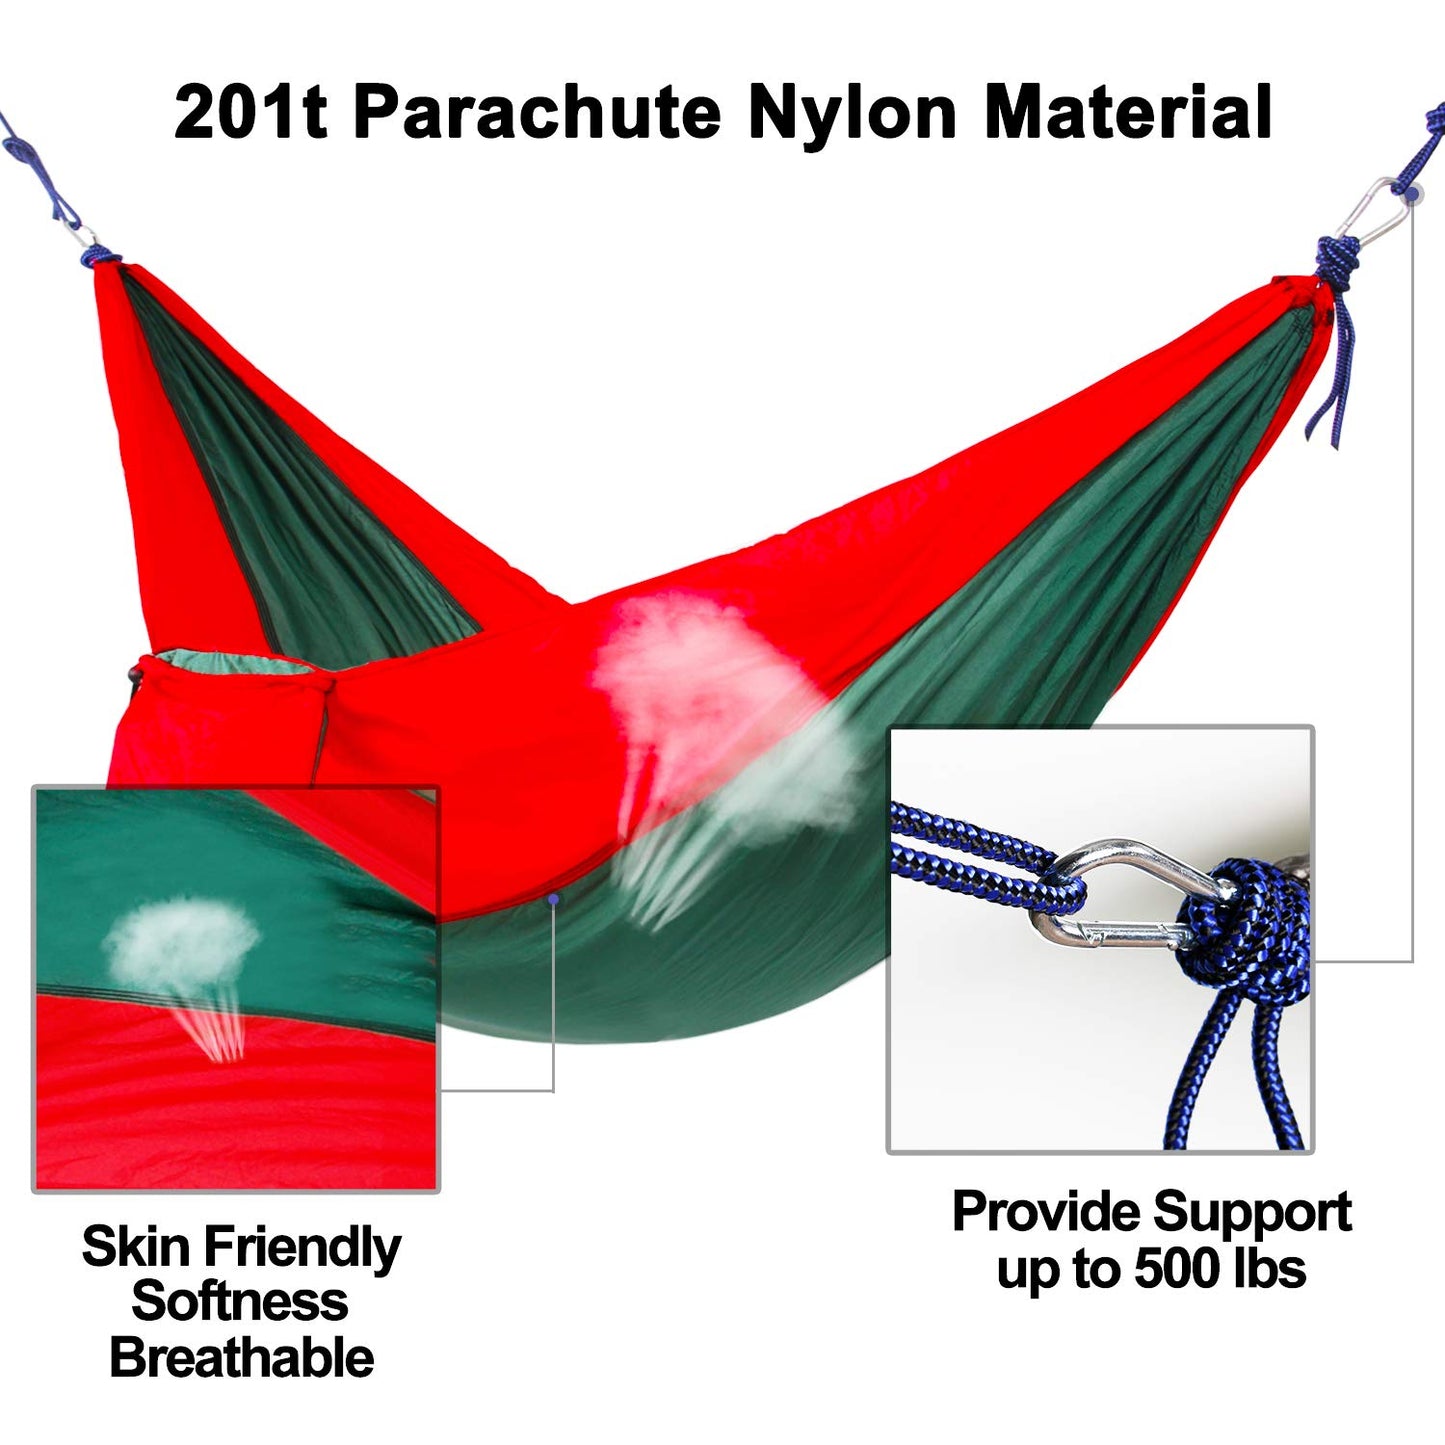 Parachute Camping Hammock - Nieoqar